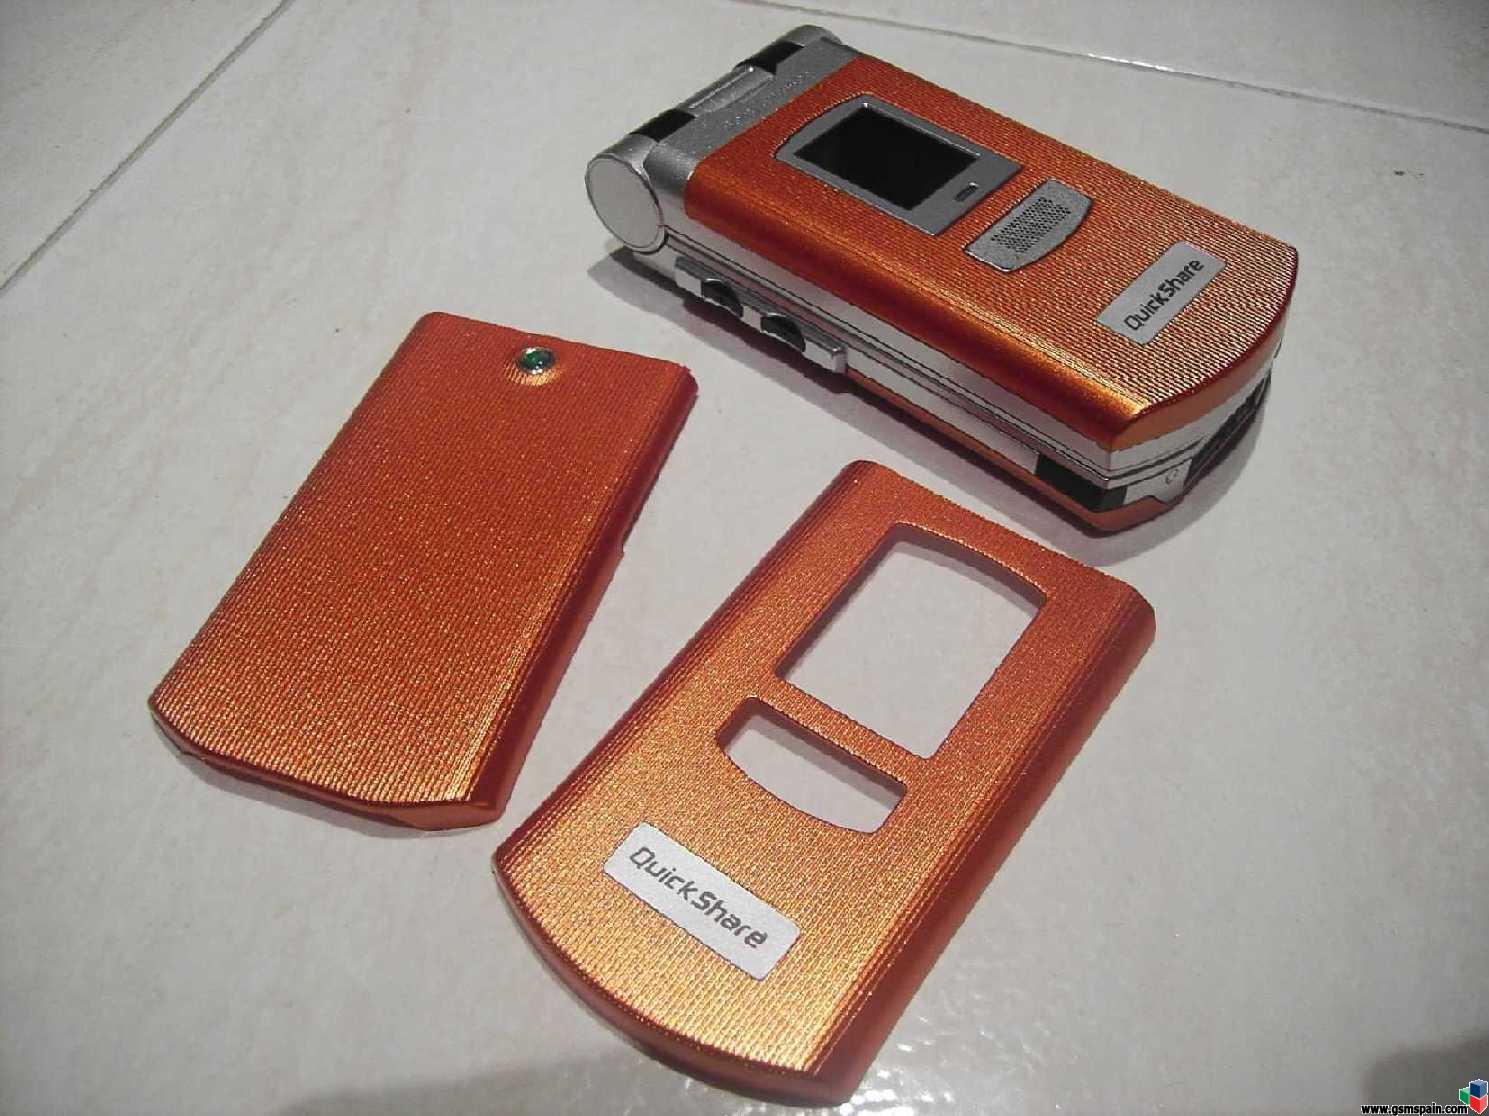 Carcasas Sony Ericsson V800 - Z800 Plata, Naranja Y Blanca  !!no Se Rayan!!